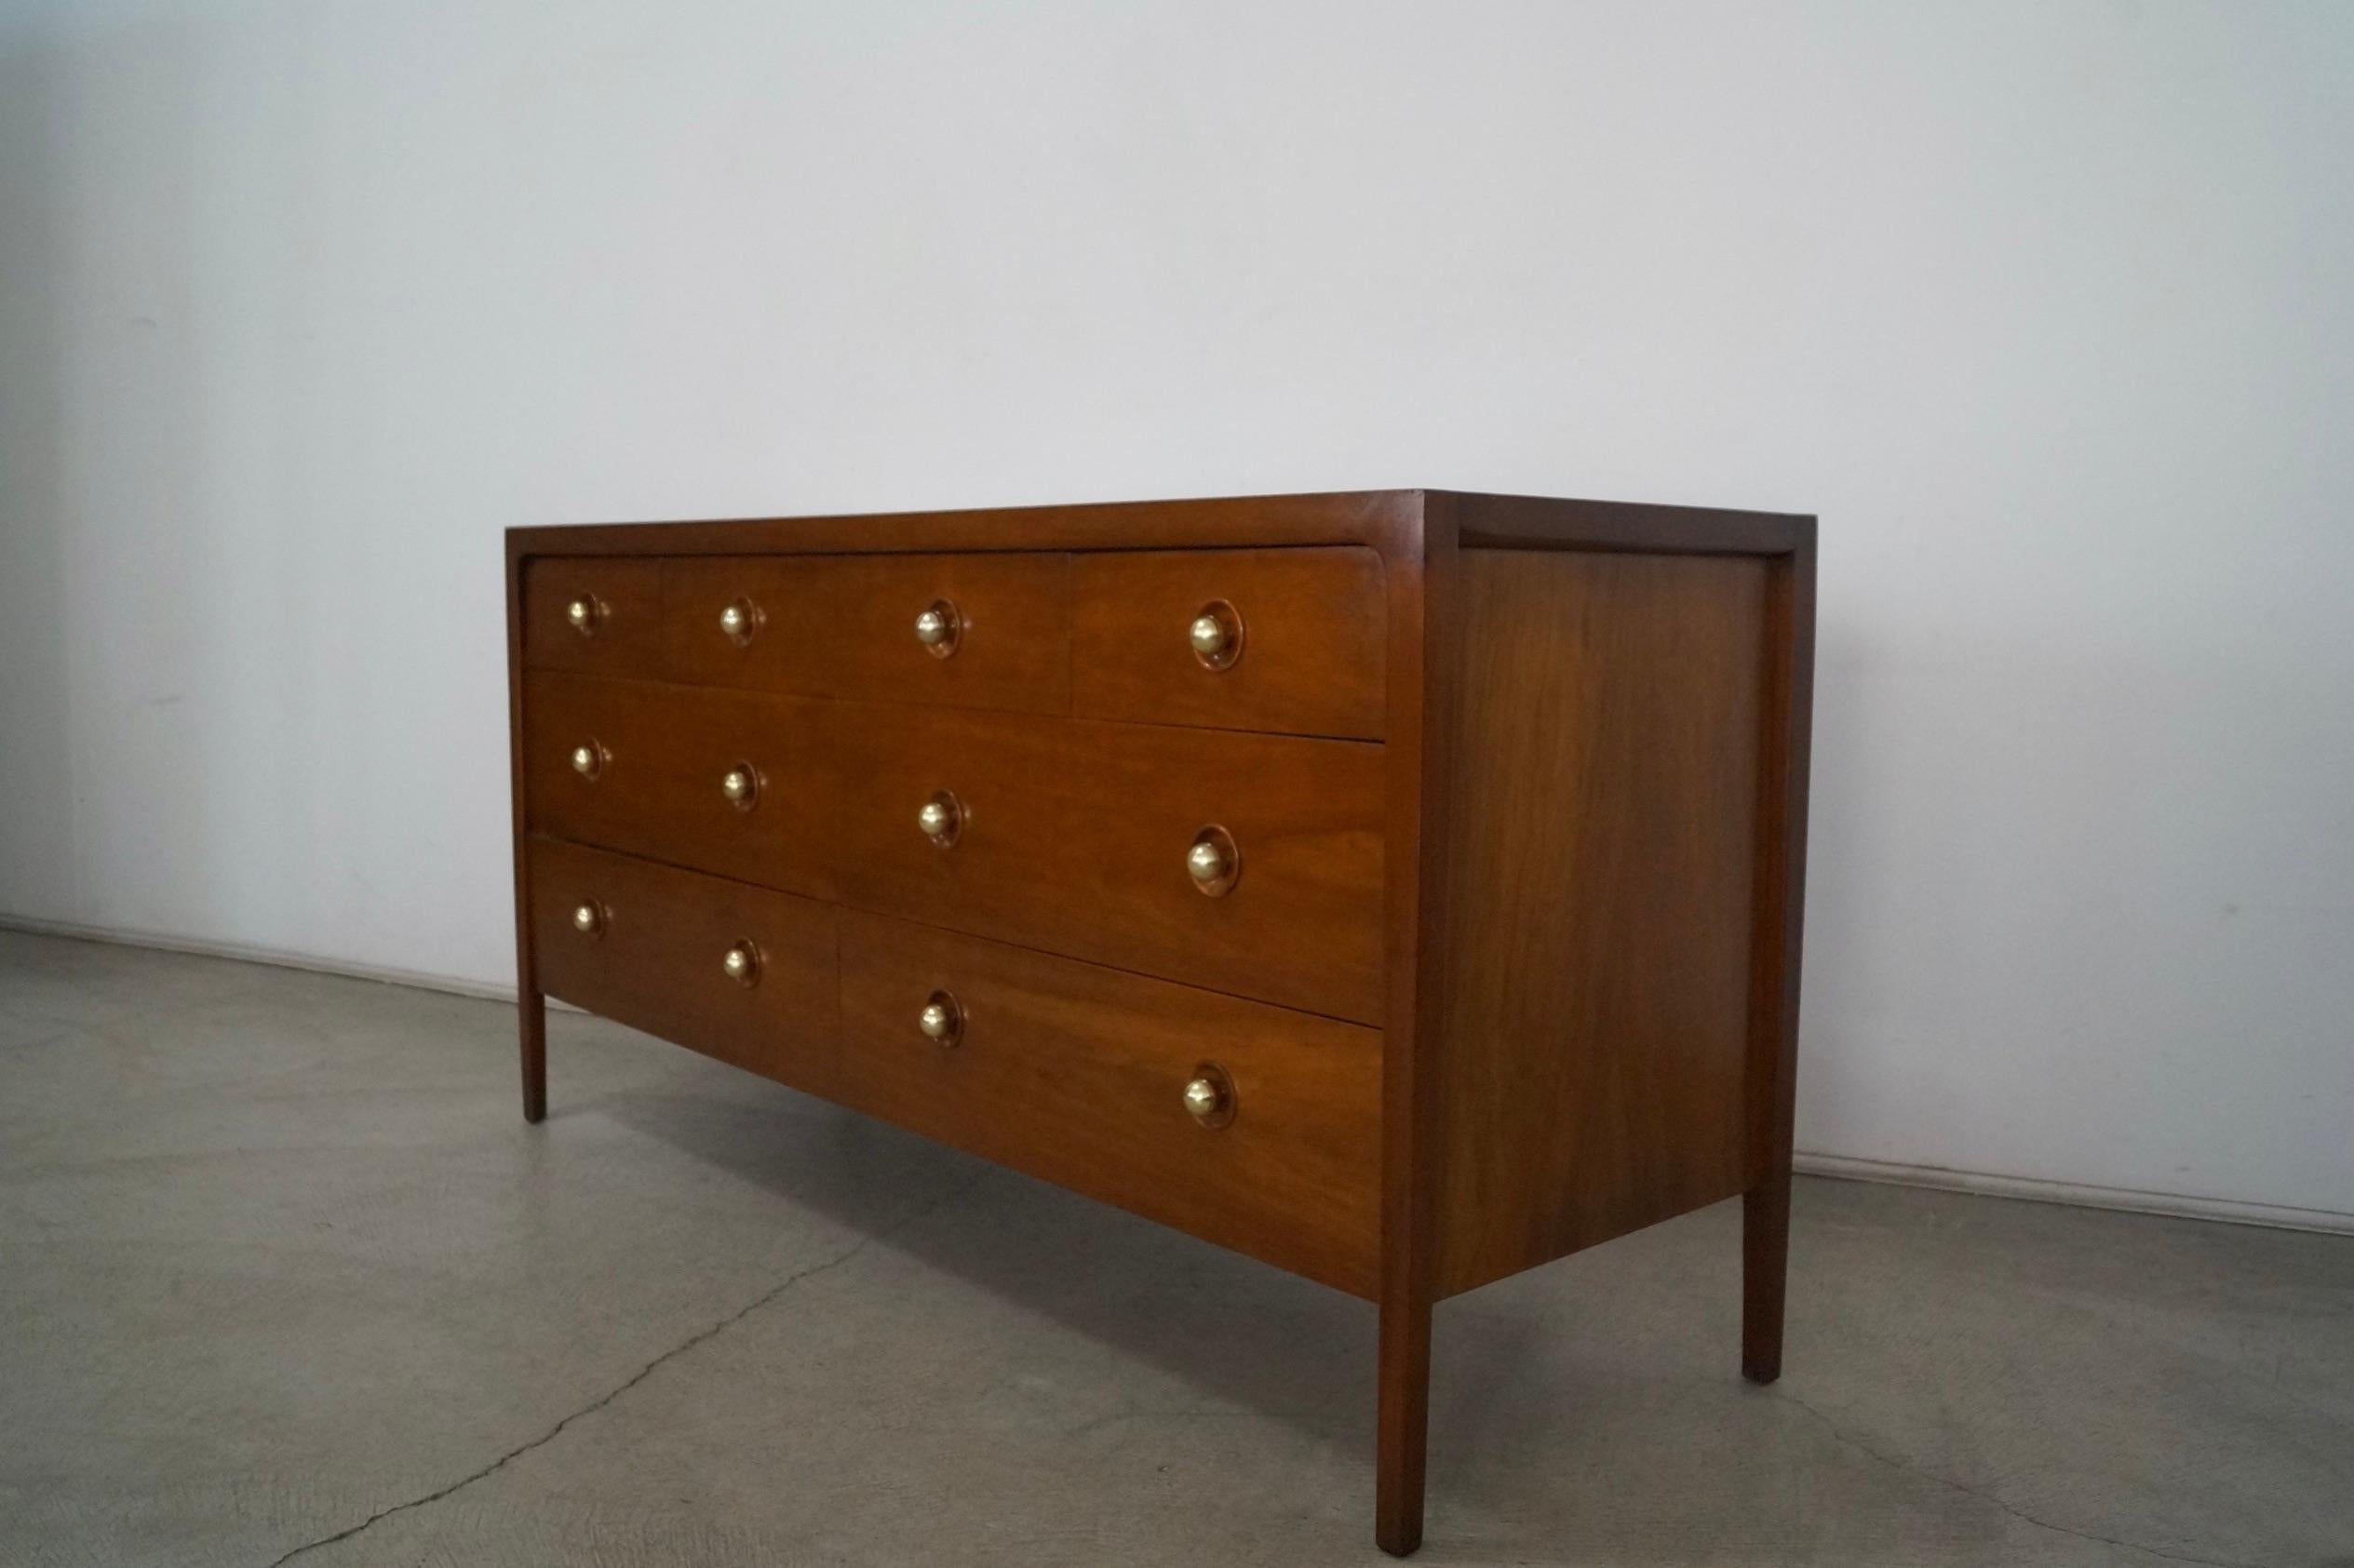 drexel furniture catalog 1950